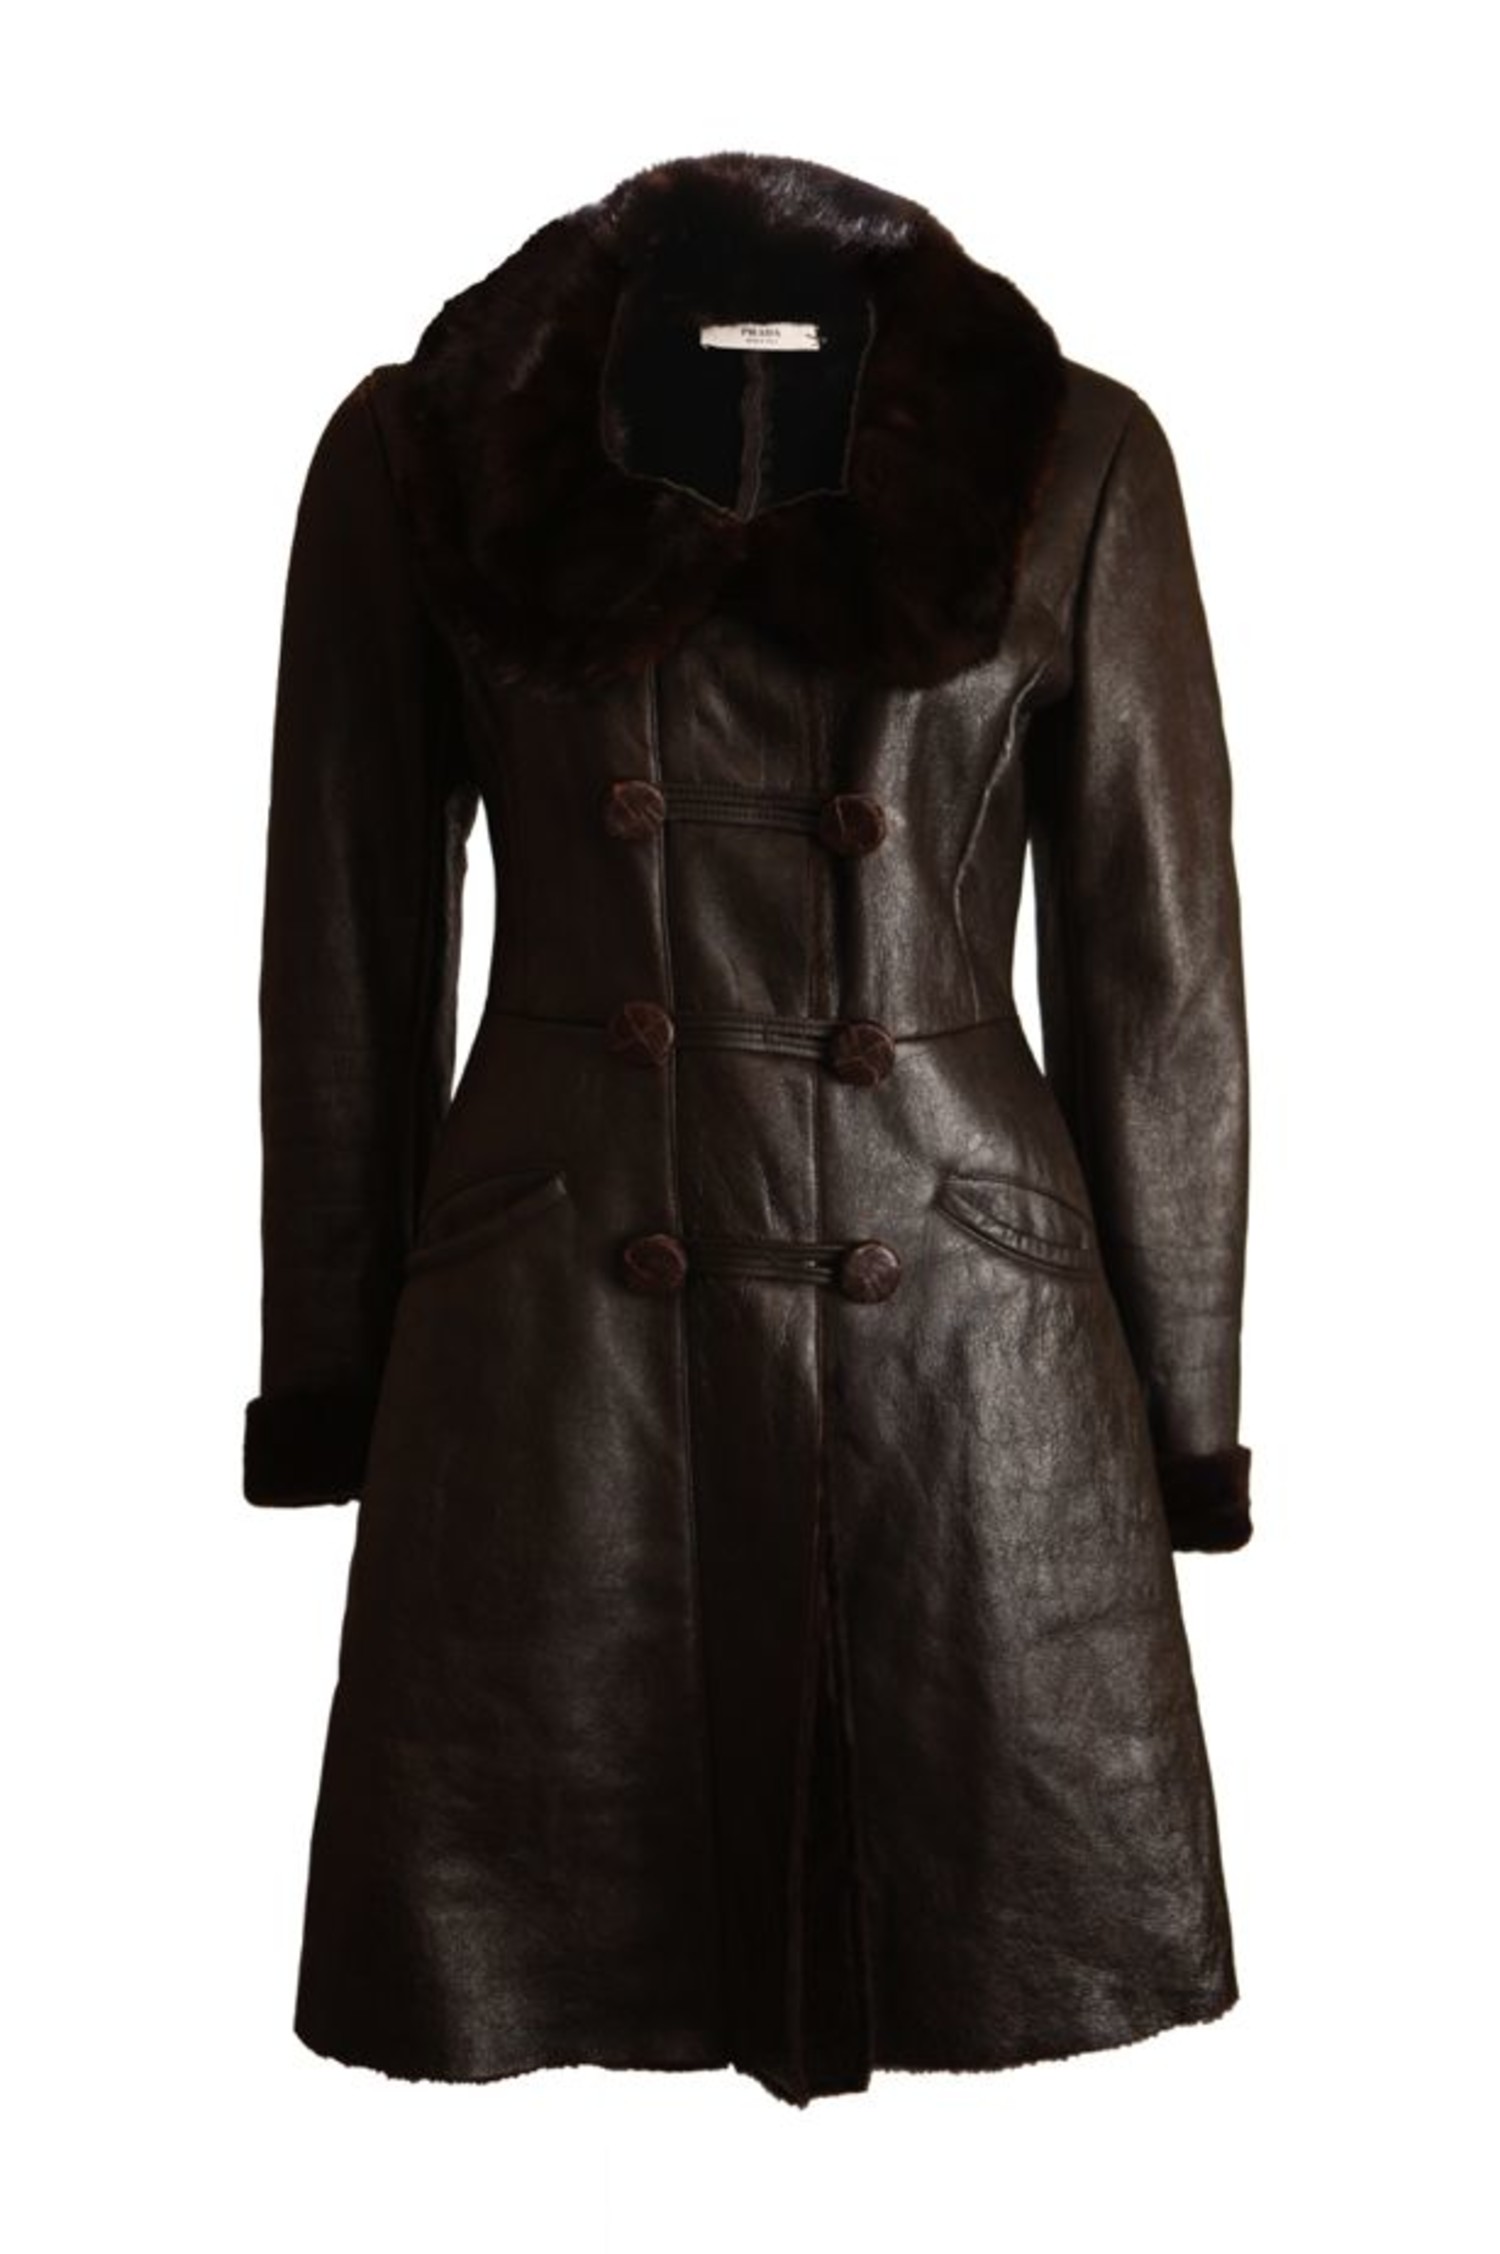 prada brown leather jacket